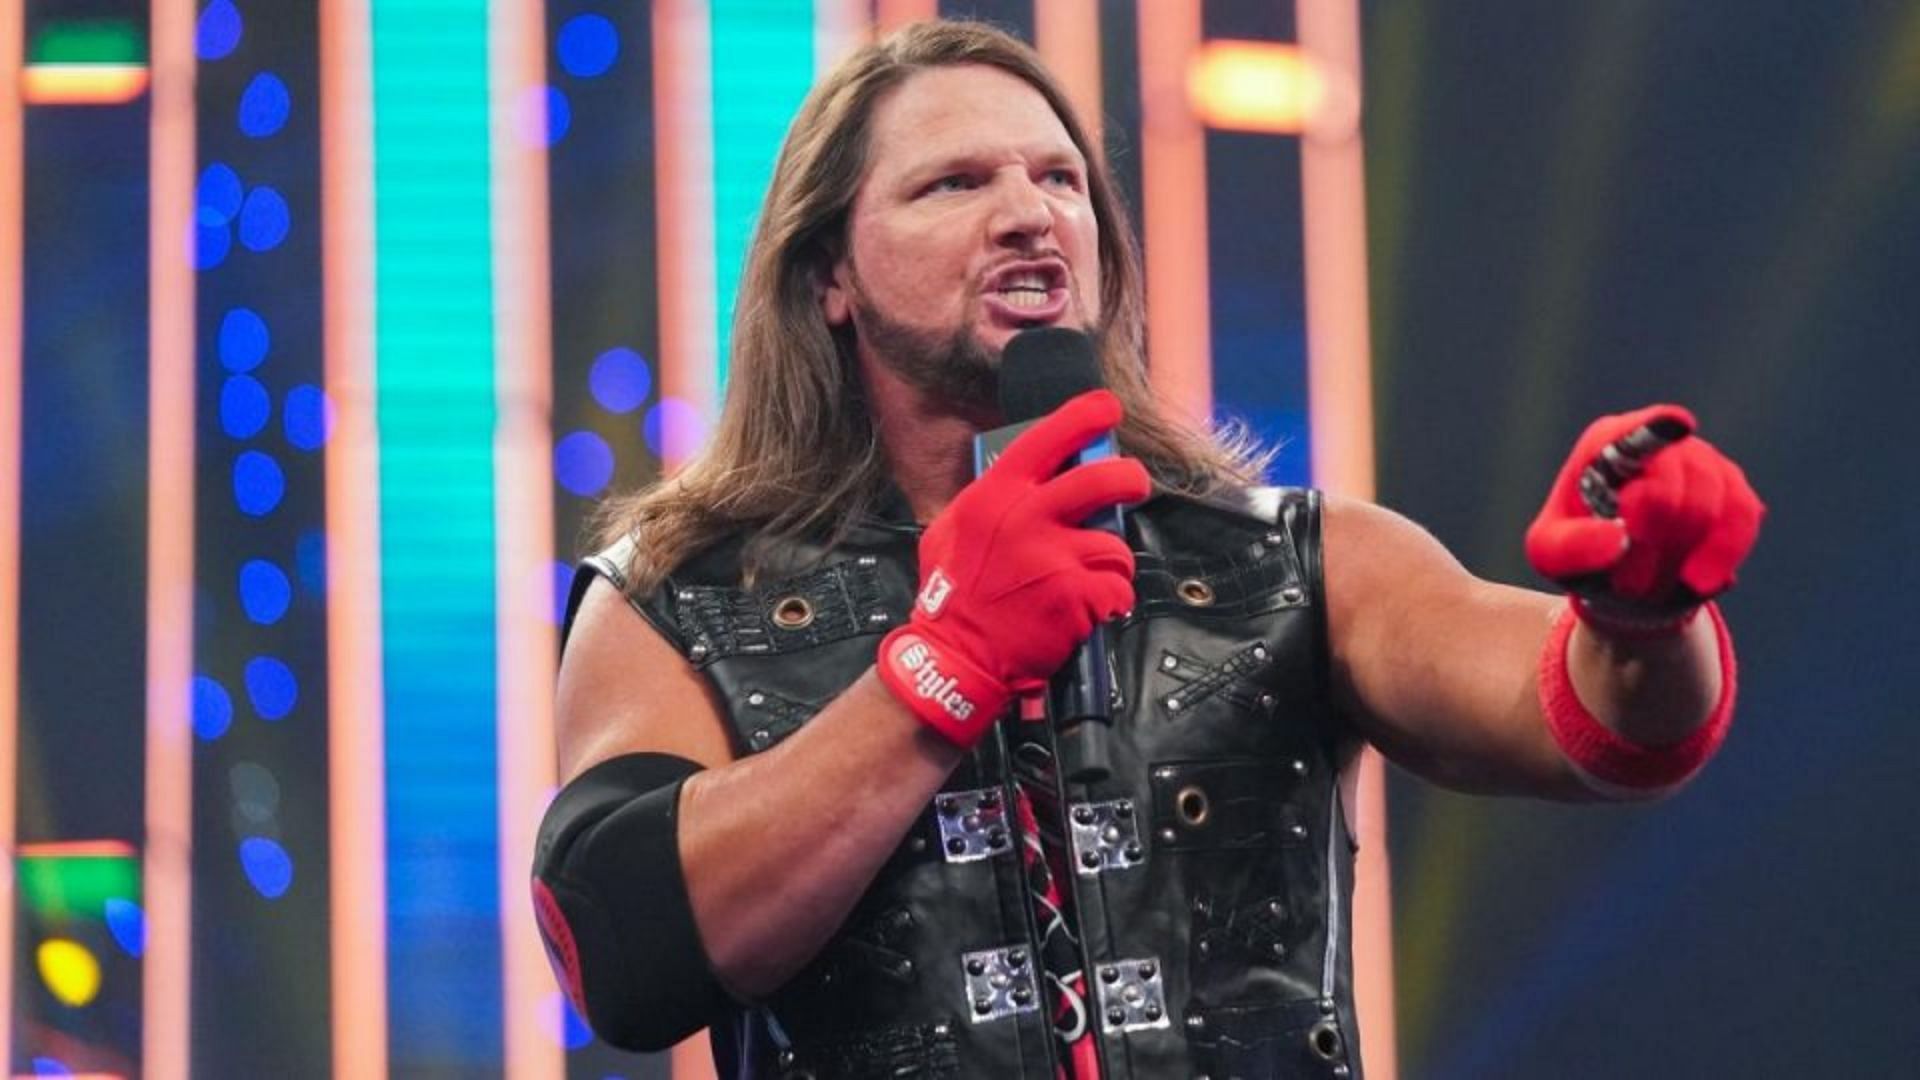 AJ Styles has called The Miz the best heel in wrestling